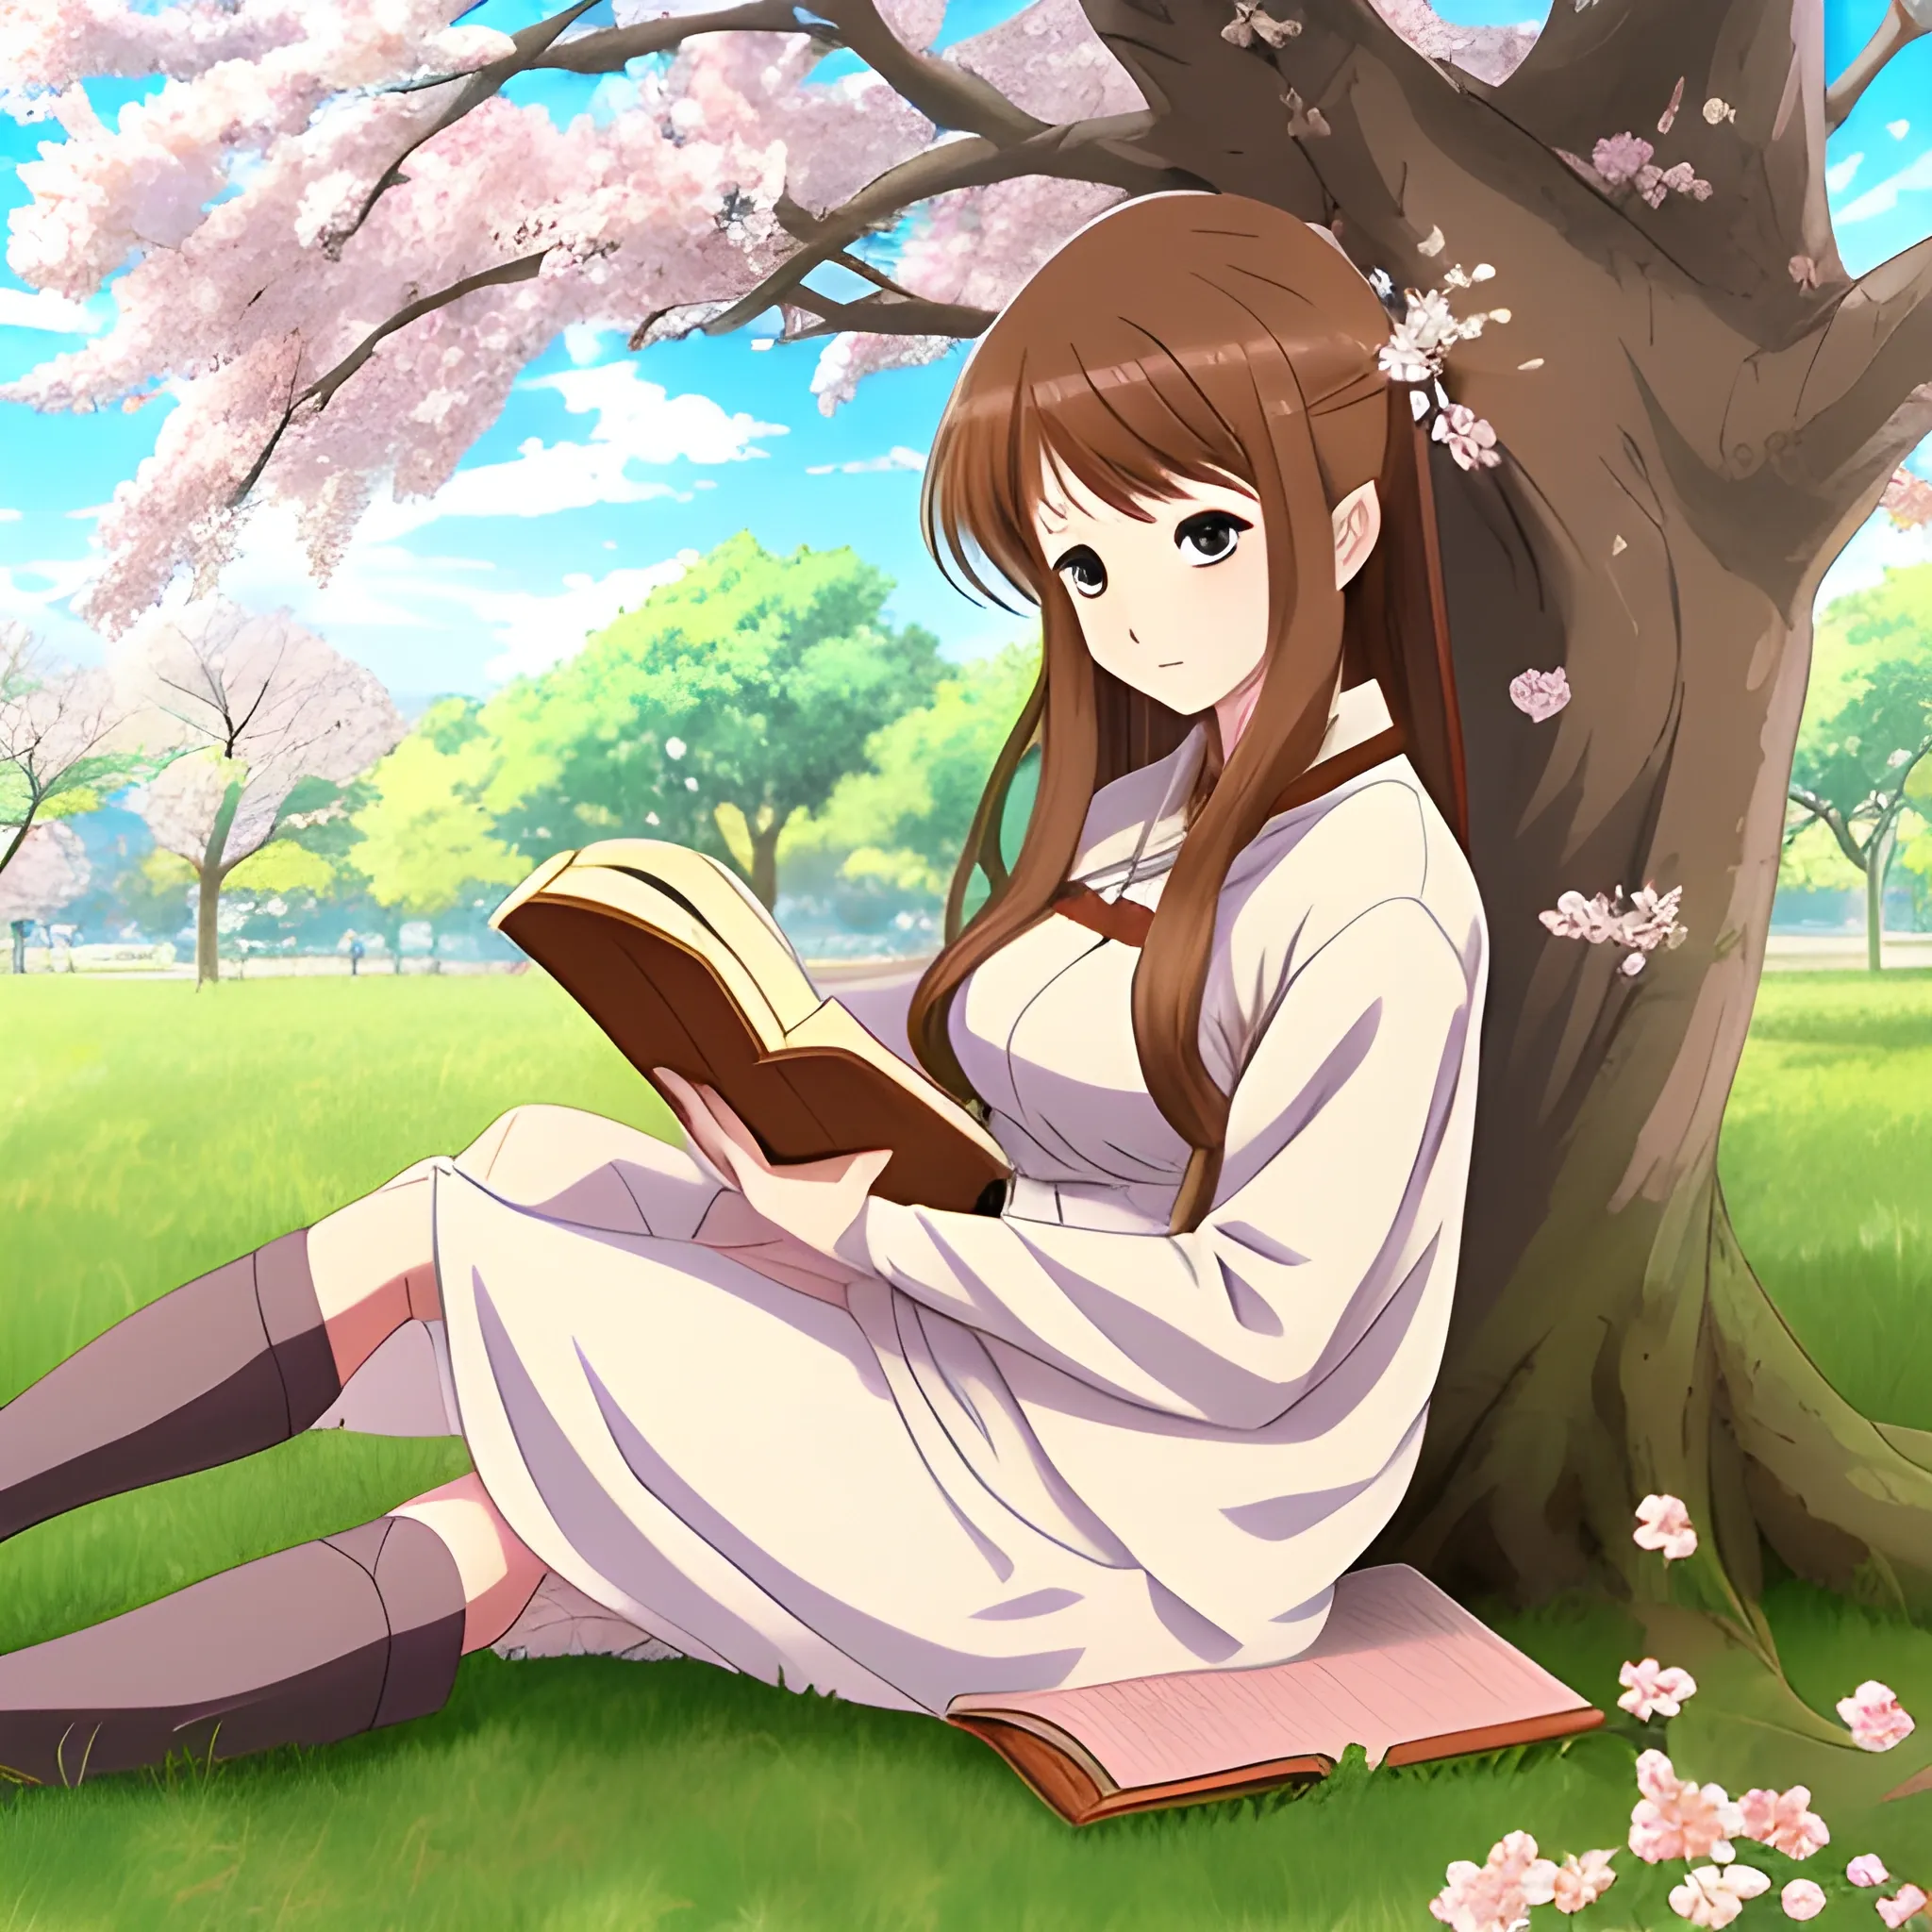 Anime girl reading - Other & Anime Background Wallpapers on Desktop Nexus  (Image 974488)